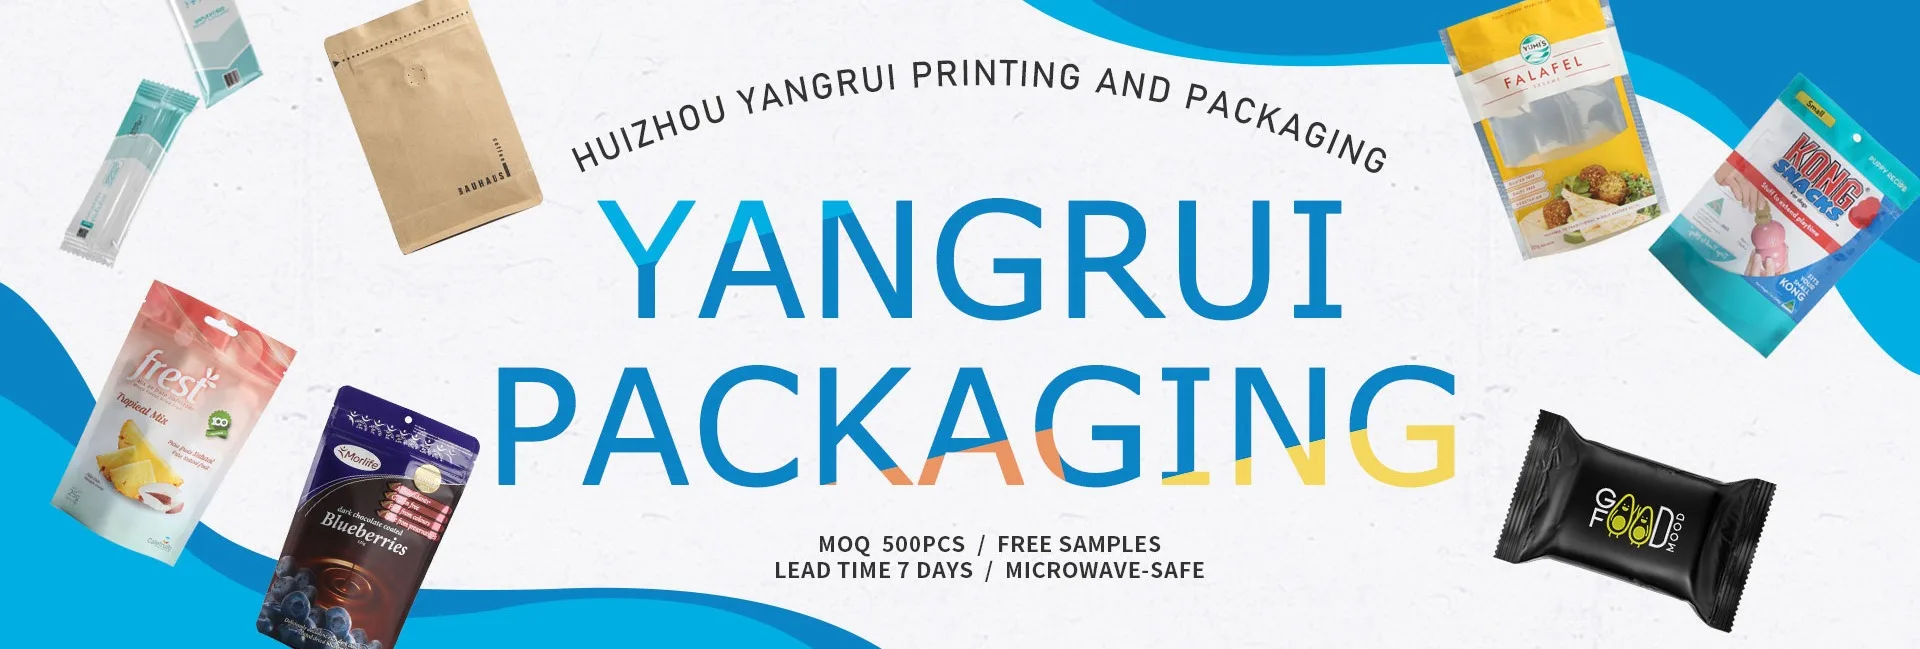 Huizhou Yang Rui Printing And Packaging Co., Ltd. - Disposable Food ...